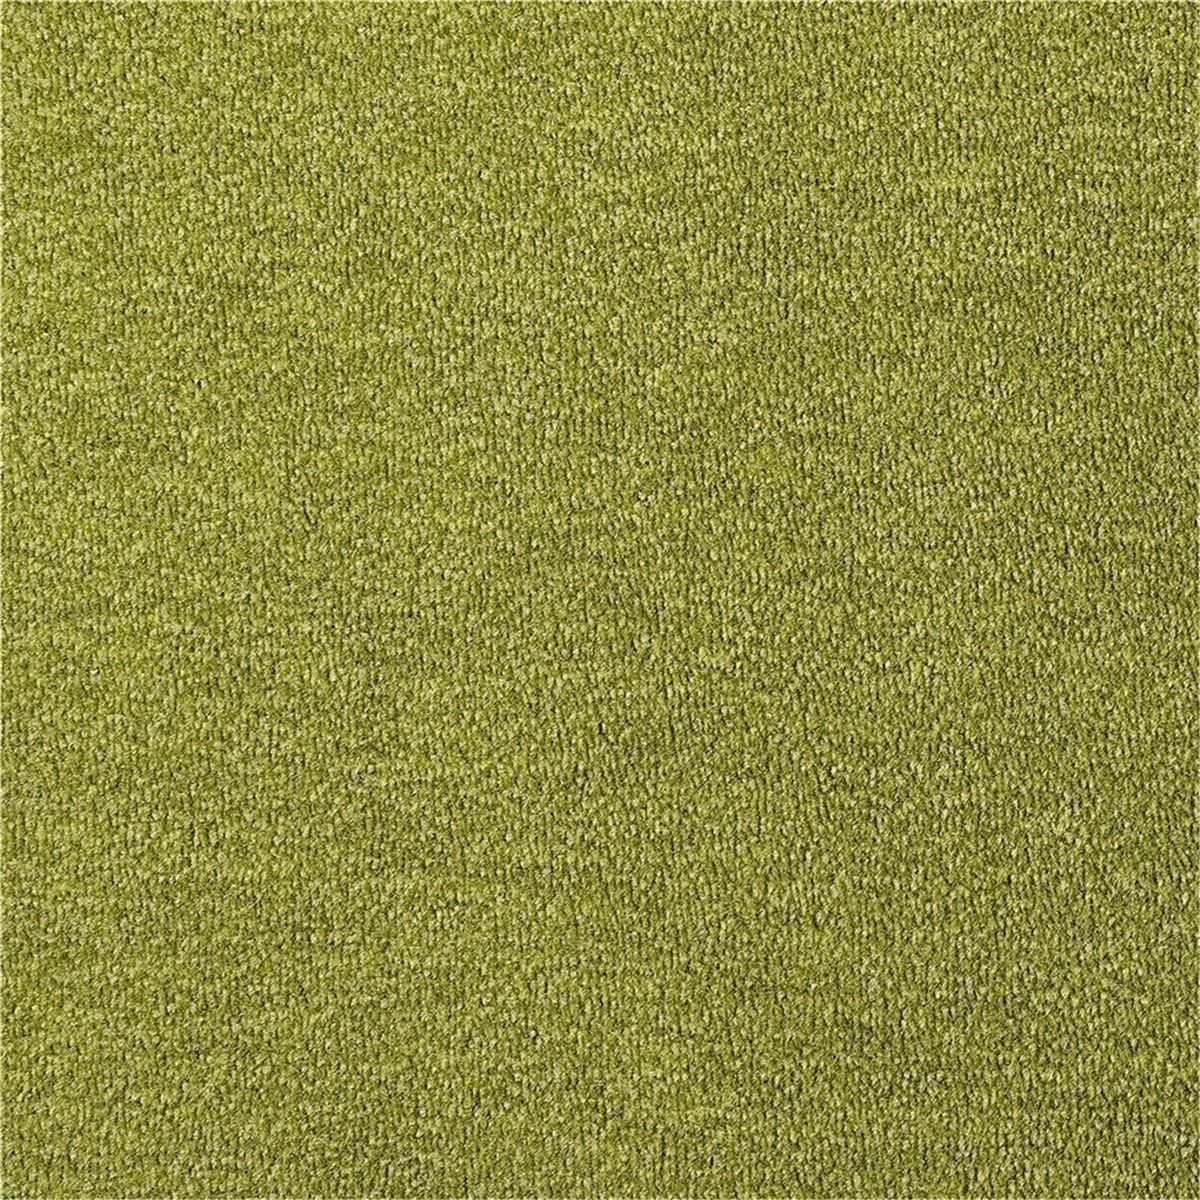 Teppichboden Infloor-Girloon Charme Velours Grün 440 meliert - Rollenbreite 400 cm